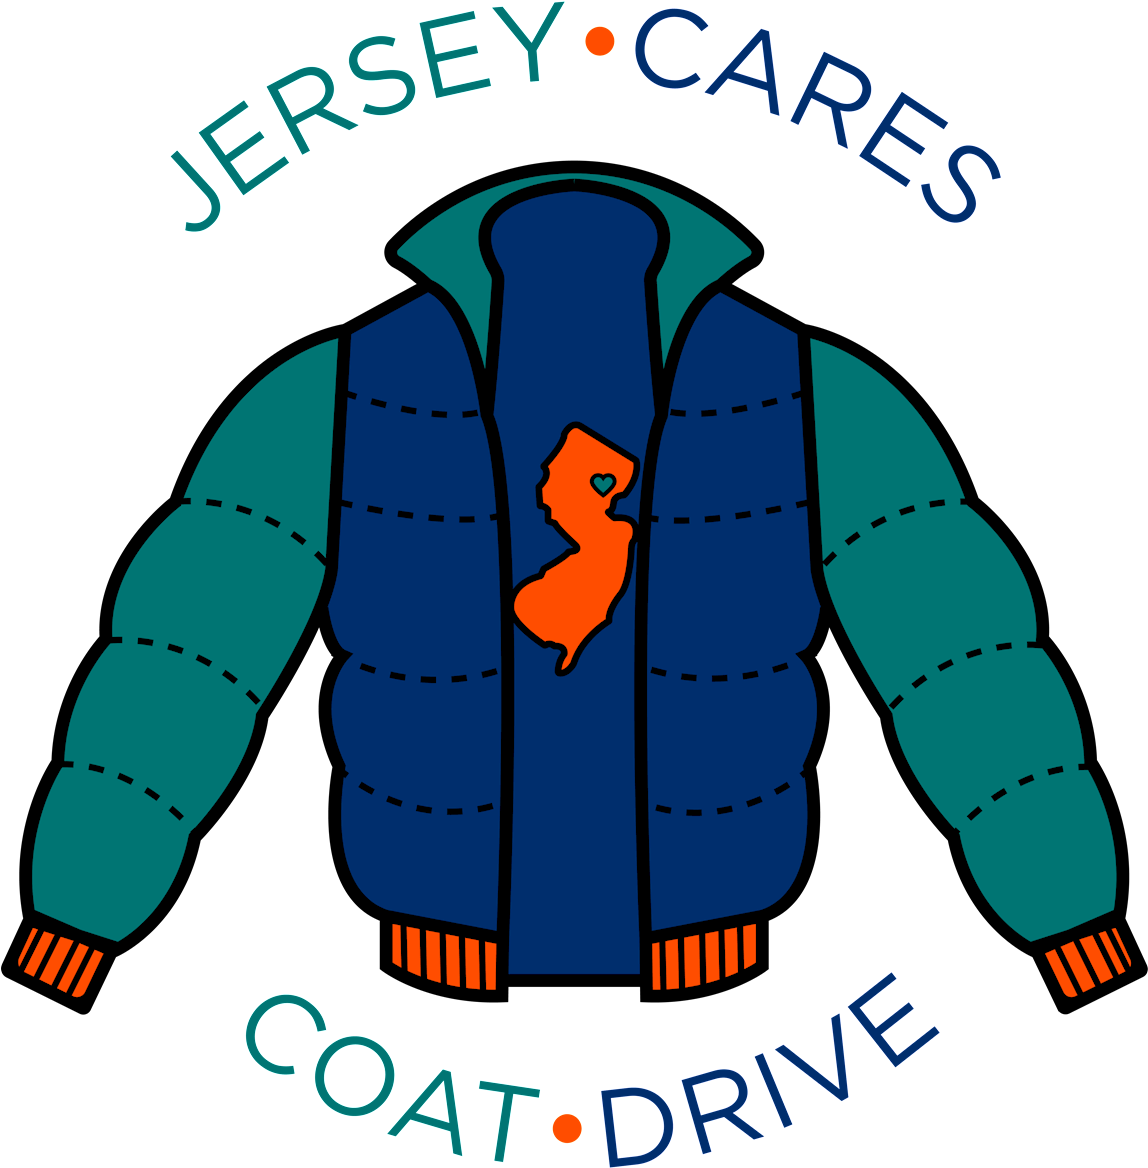 Jersey Cares Coat Drive Logo PNG